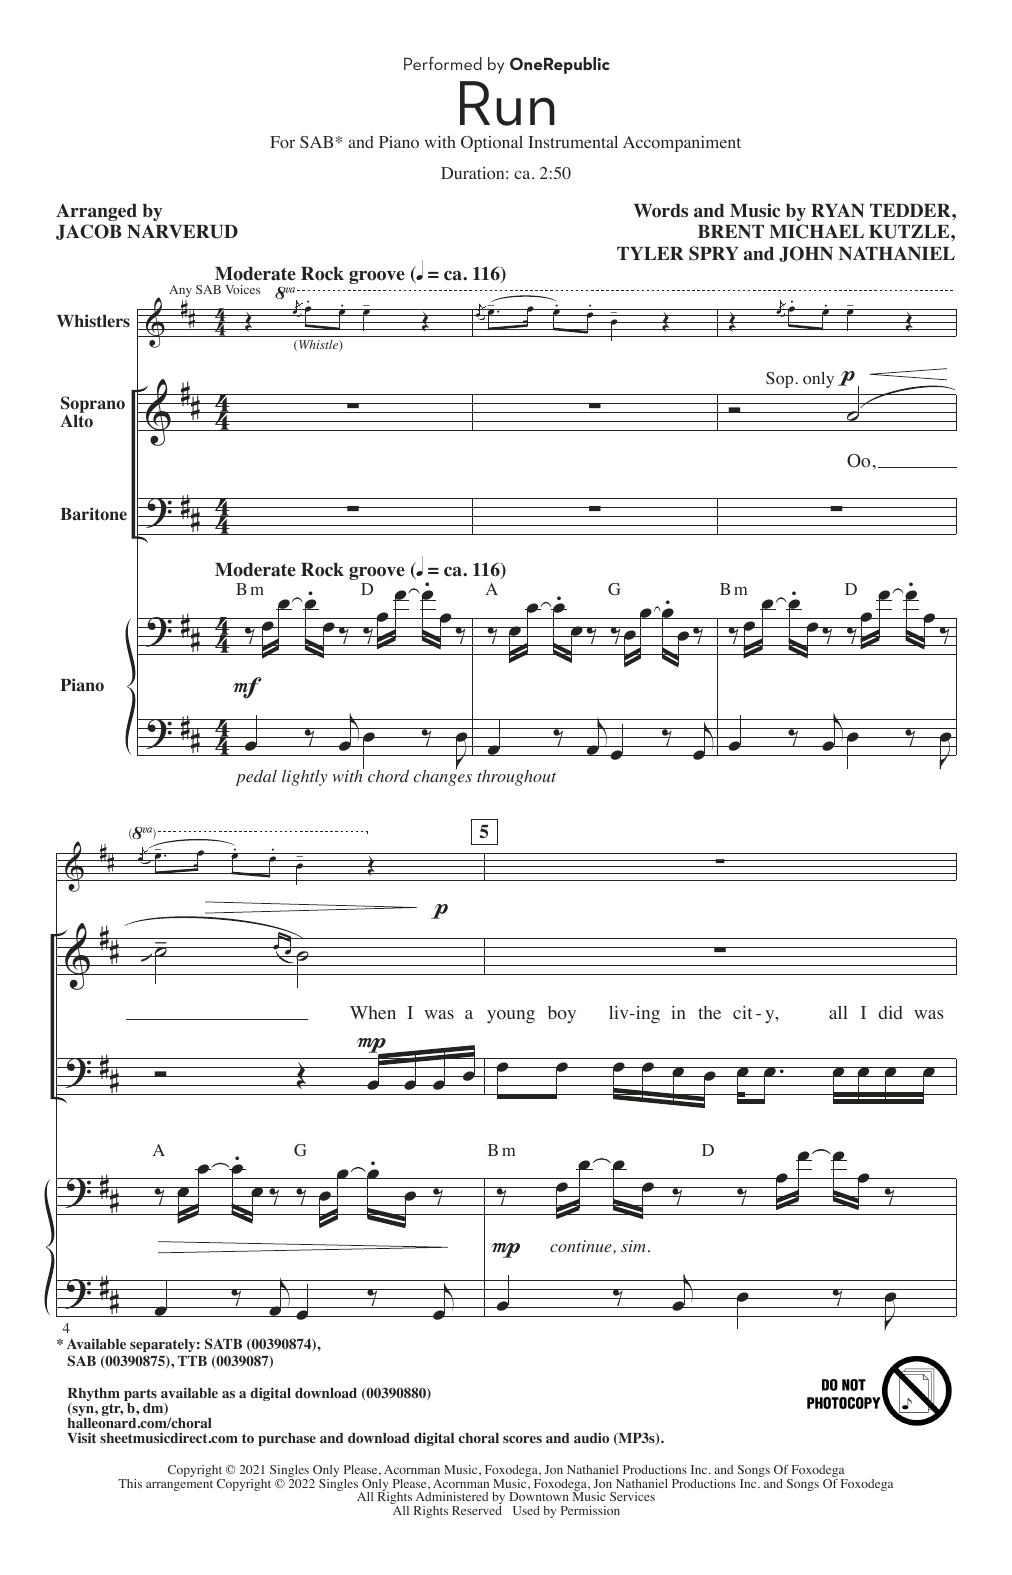 OneRepublic Run (arr. Jacob Narverud) Sheet Music Notes & Chords for SAB Choir - Download or Print PDF